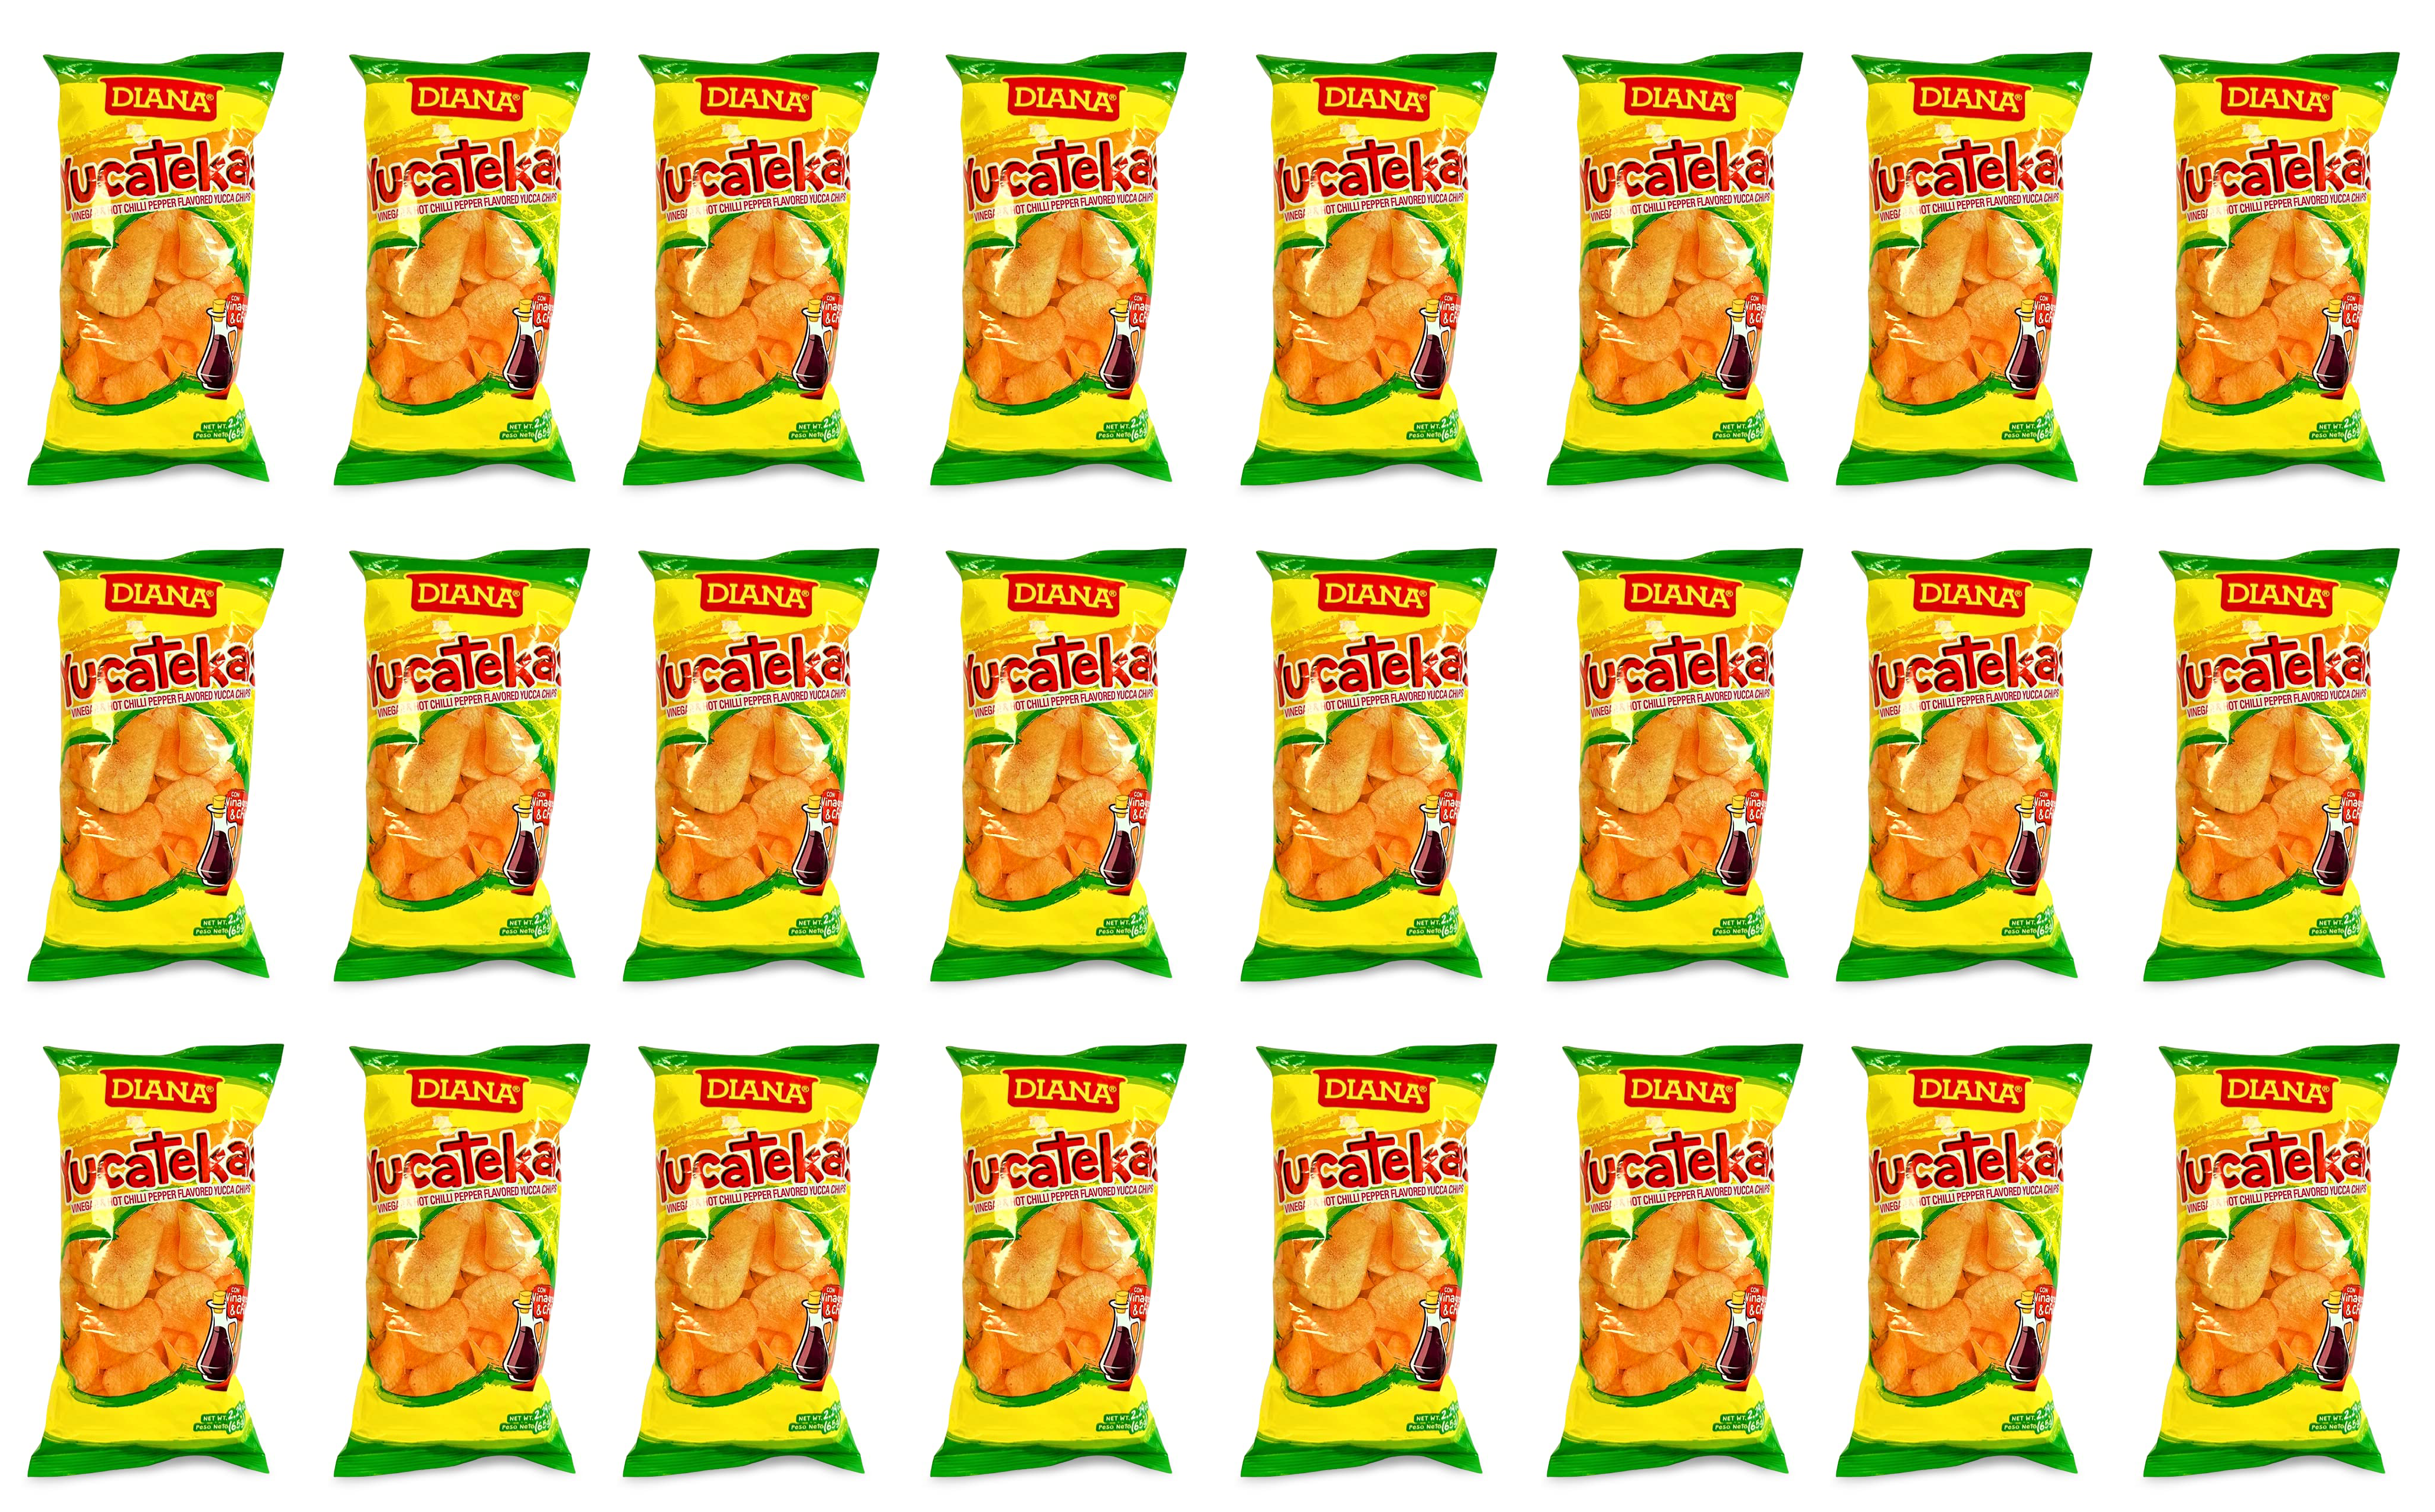 24 Bags of Diana Yucatekas chips